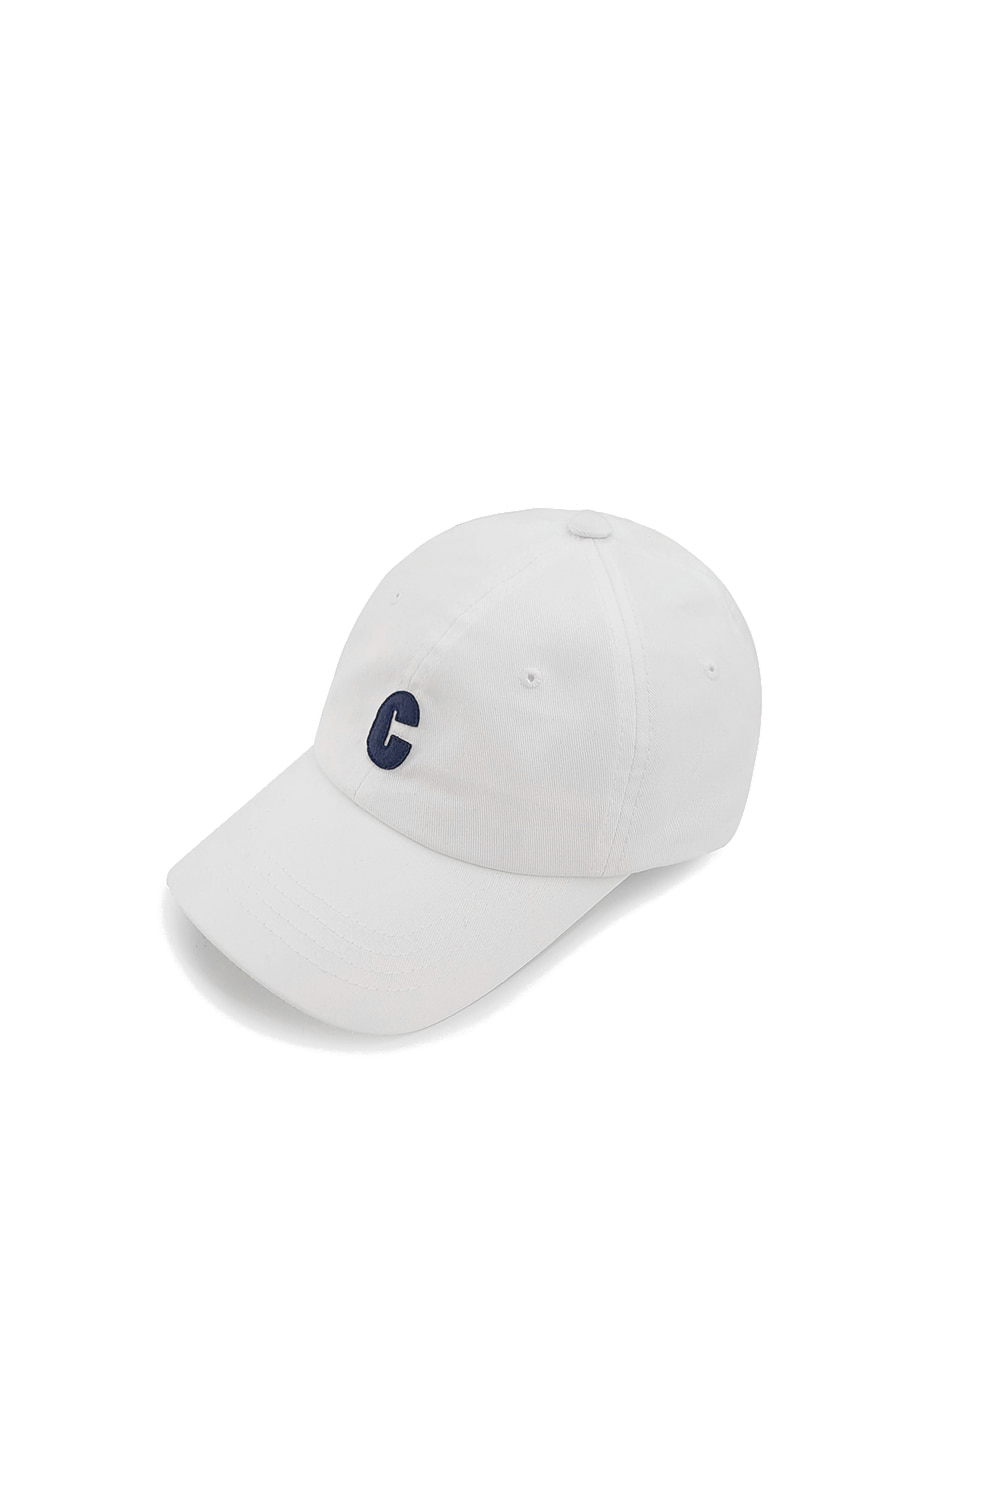 C LOGO BALL CAP WHITE